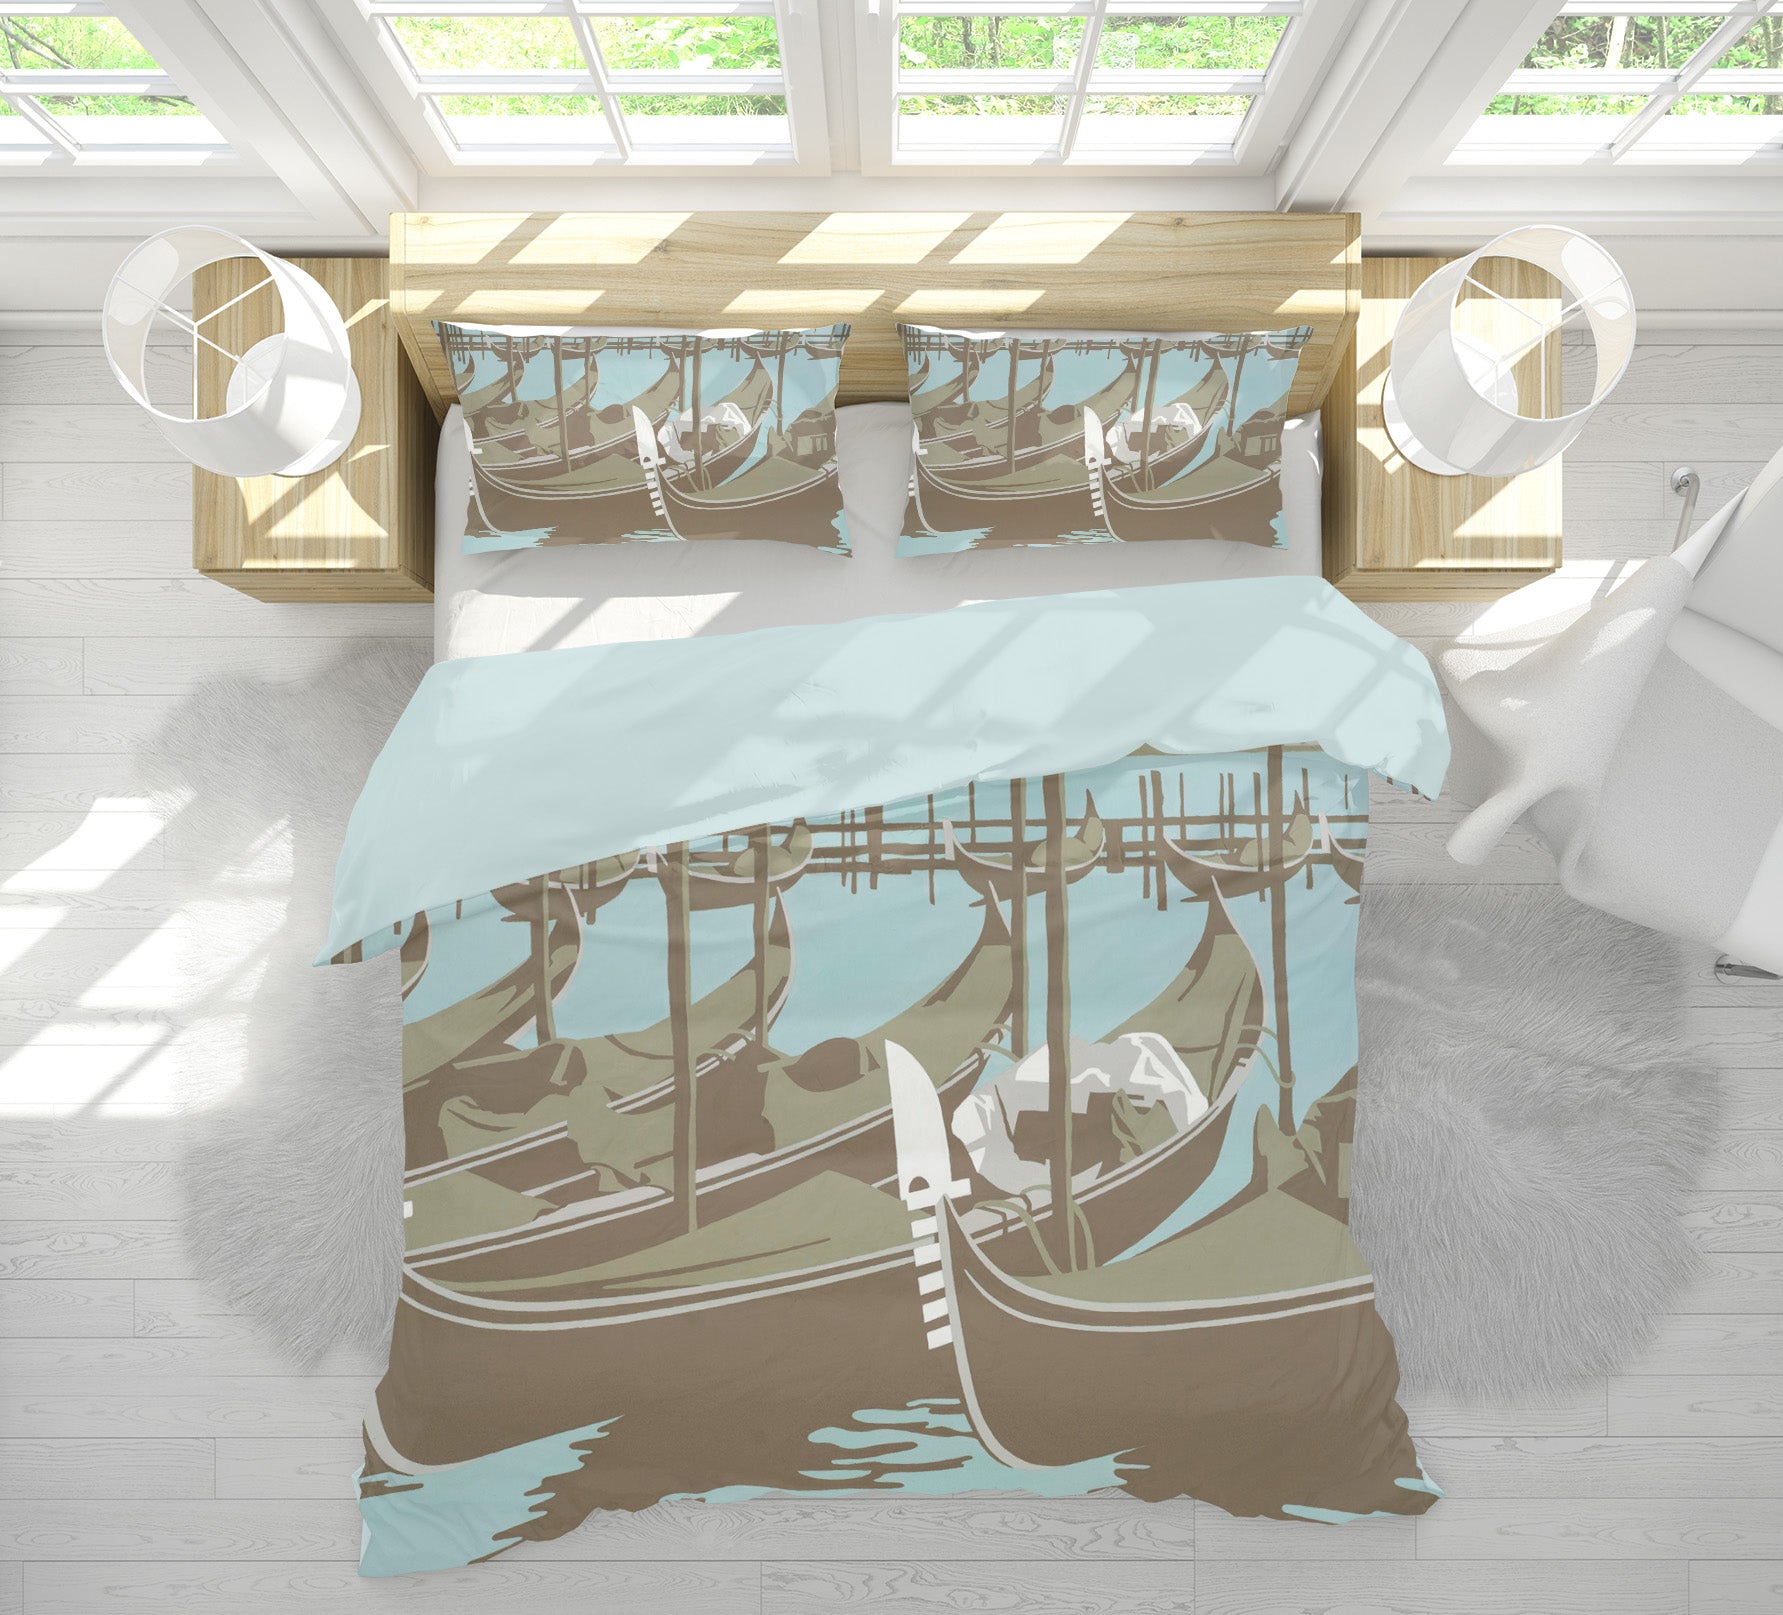 3D Venice 2076 Steve Read Bedding Bed Pillowcases Quilt